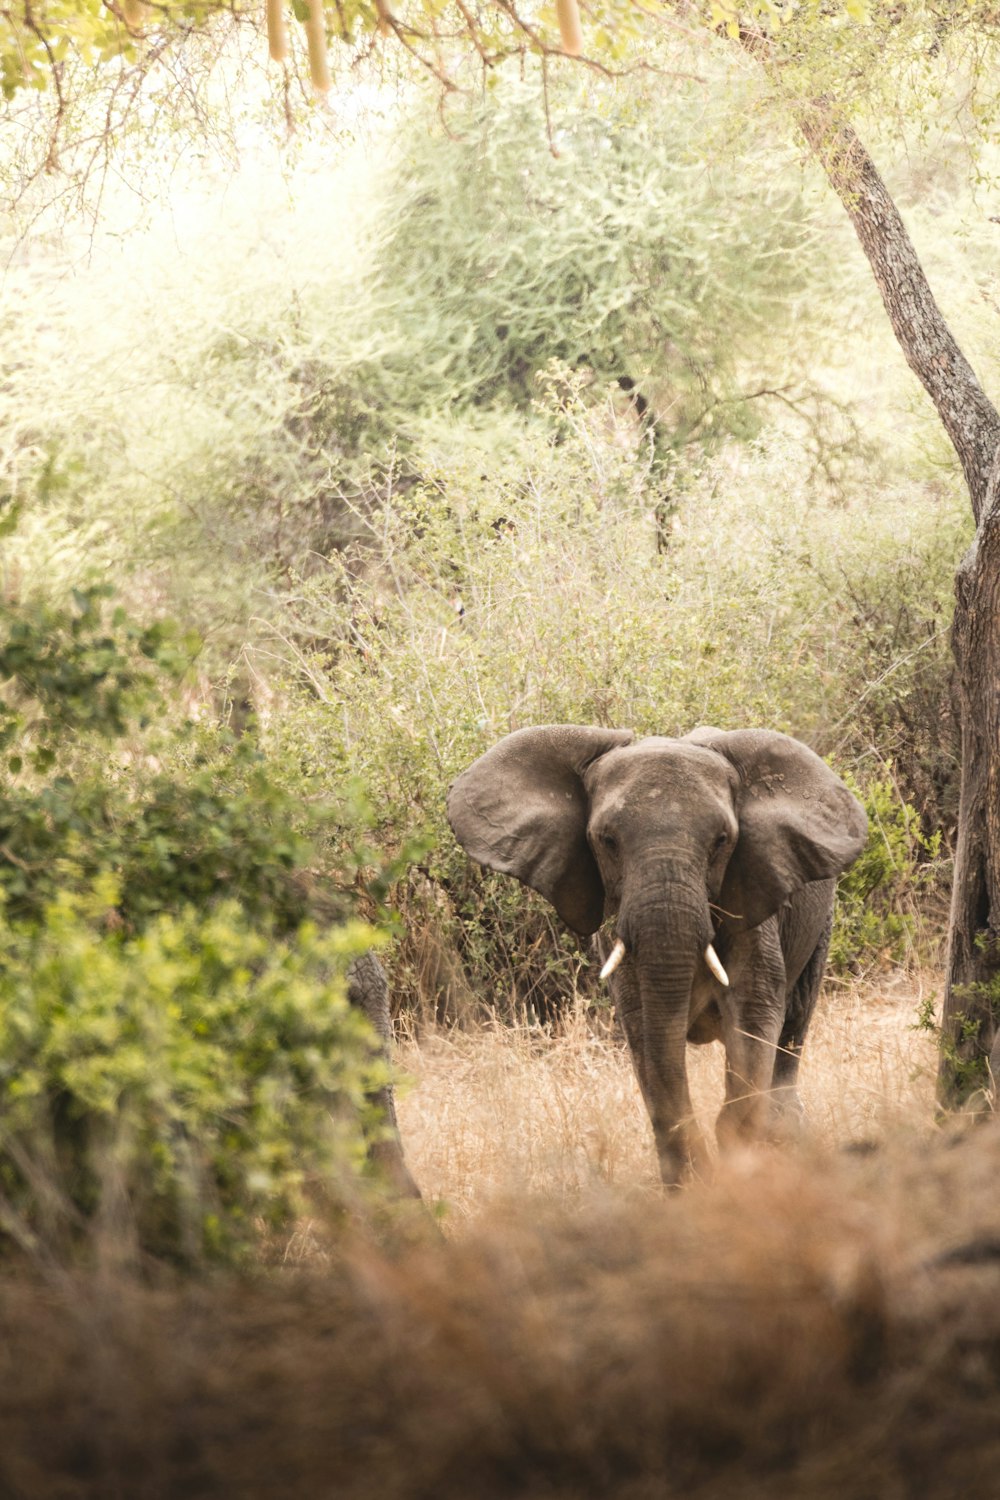 an elephant is walking through the brush near a tree